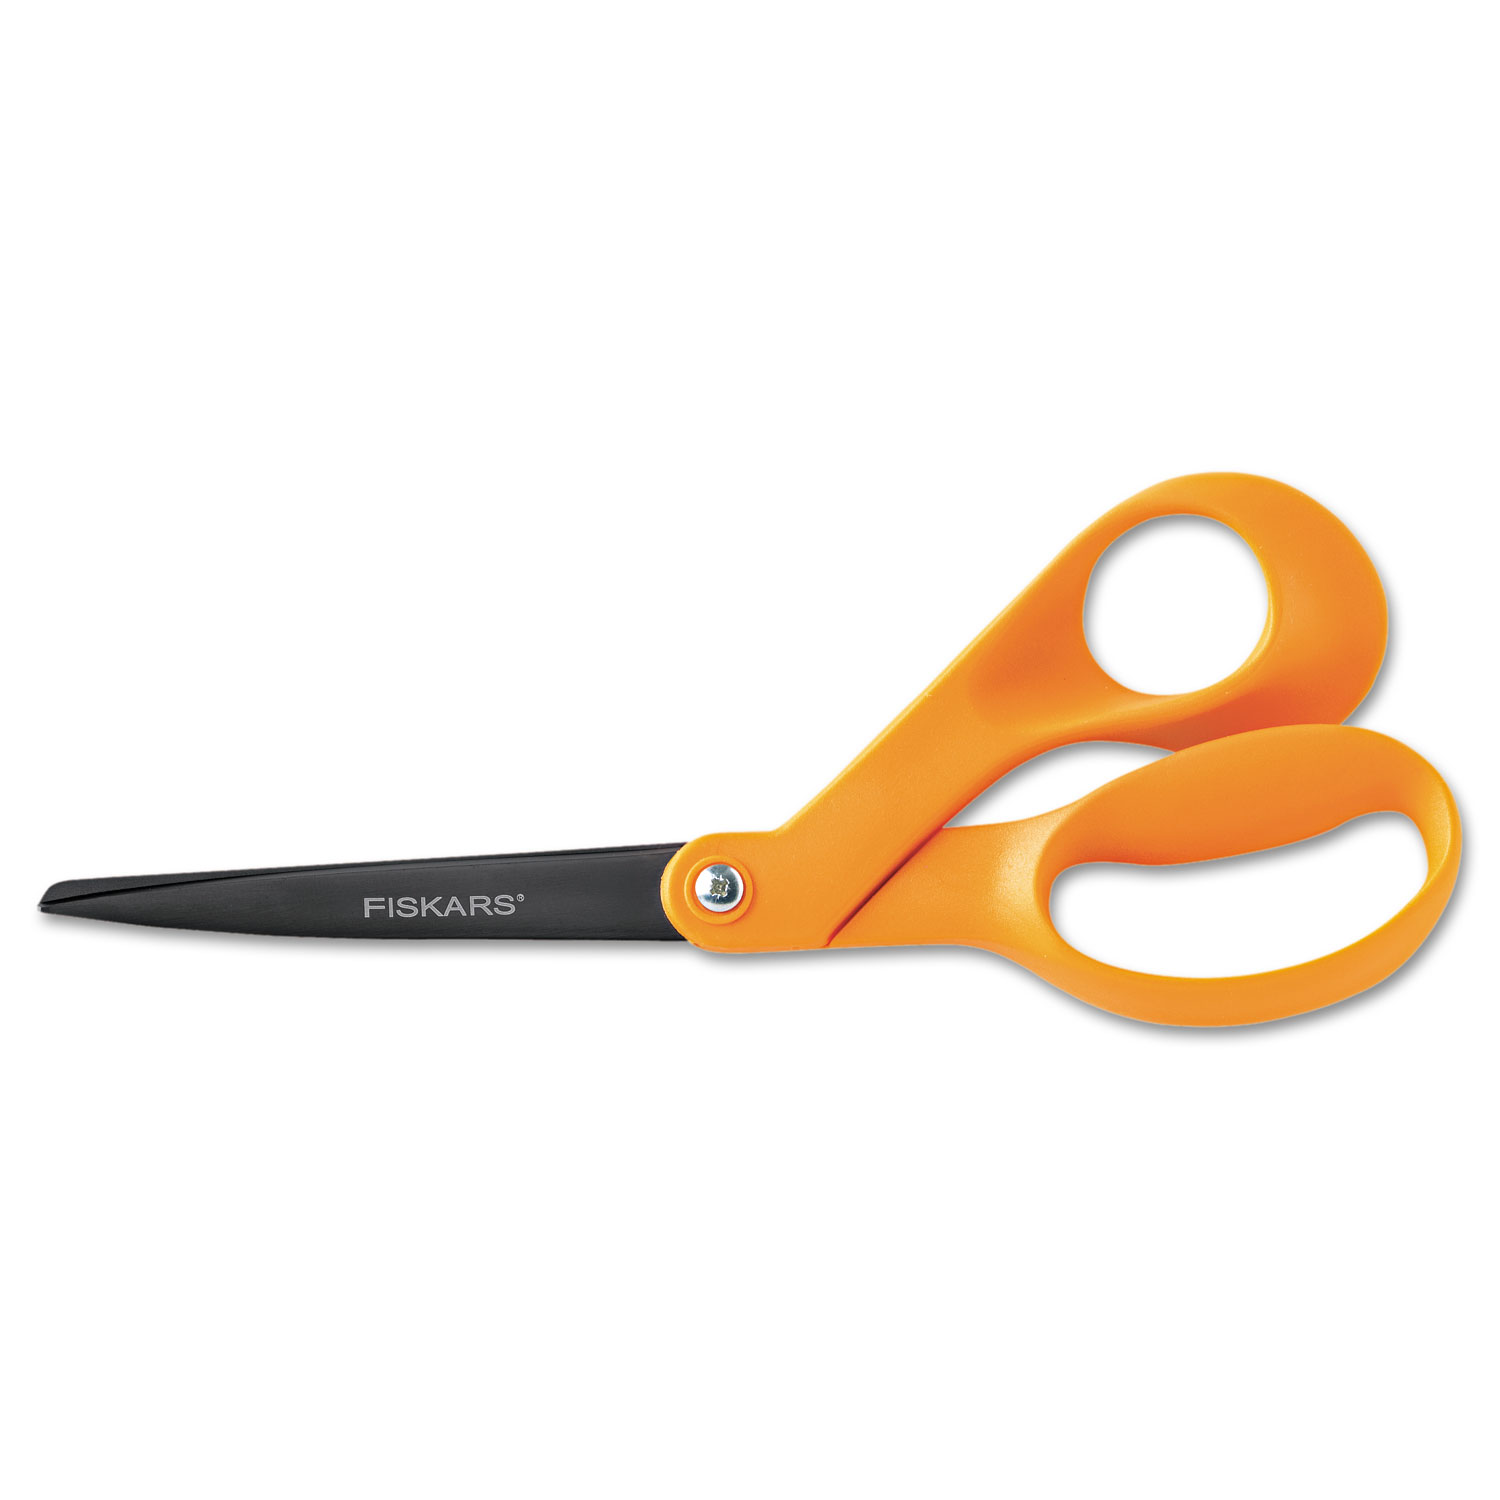 Stainless Steel Office Scissors, 8.5 Long, 3.75 Cut Length, Black Offset  Handle - Zerbee